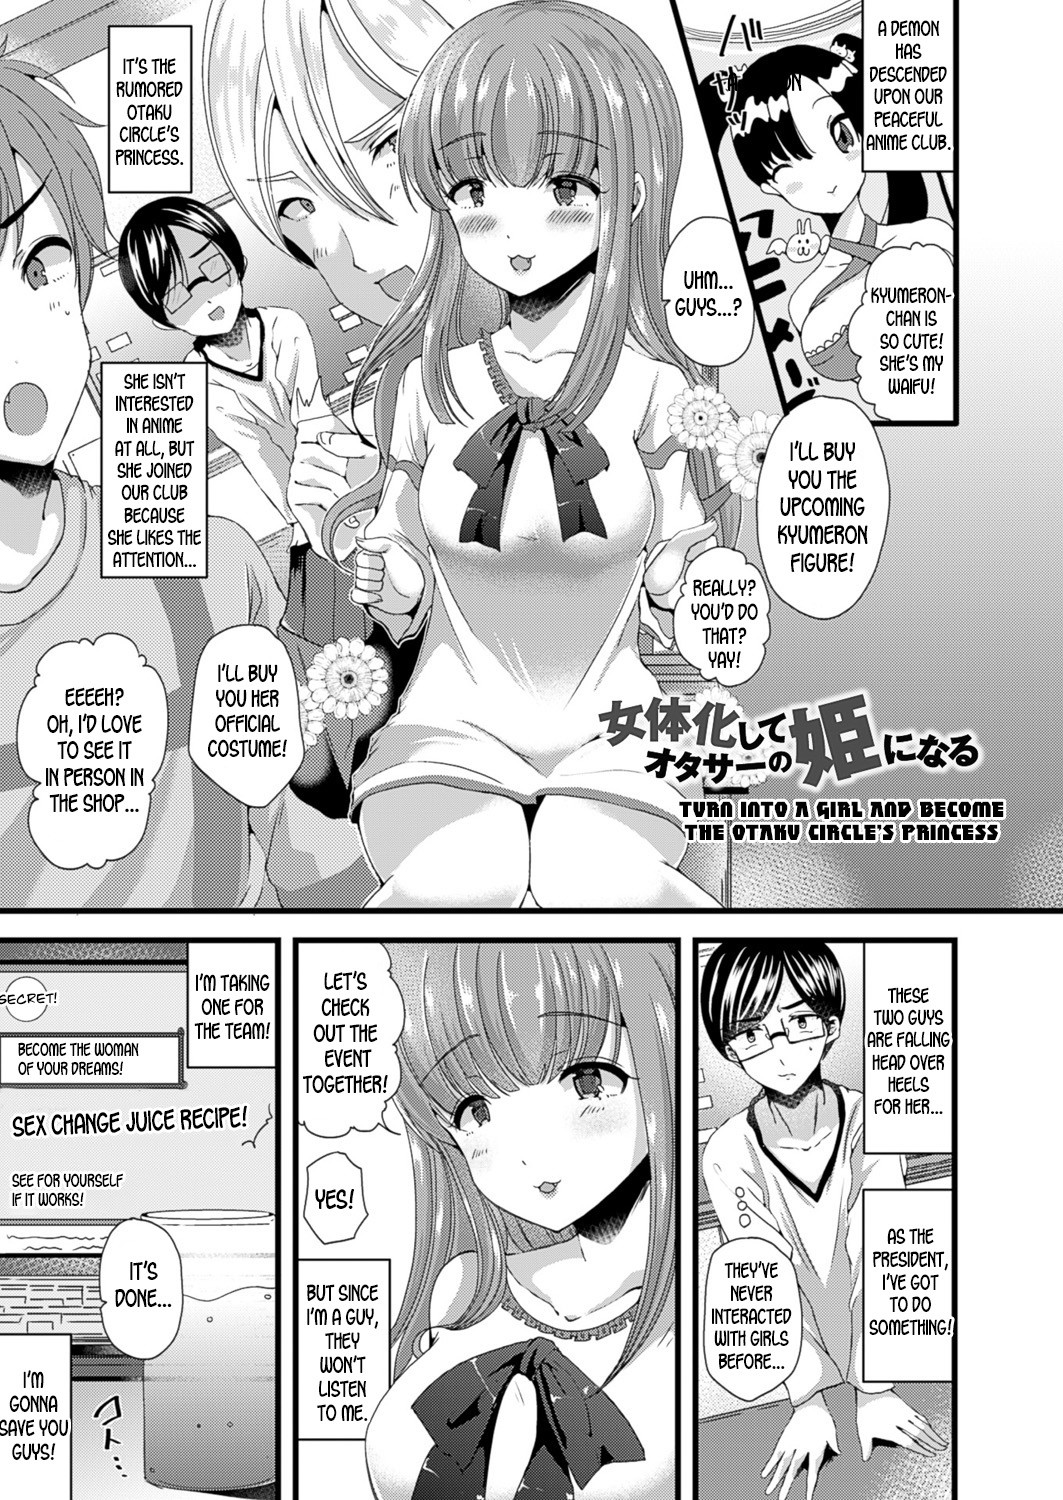 Hentai Manga Comic-Turn Into a Girl and Become The Otaku Circle's Princess-Read-1